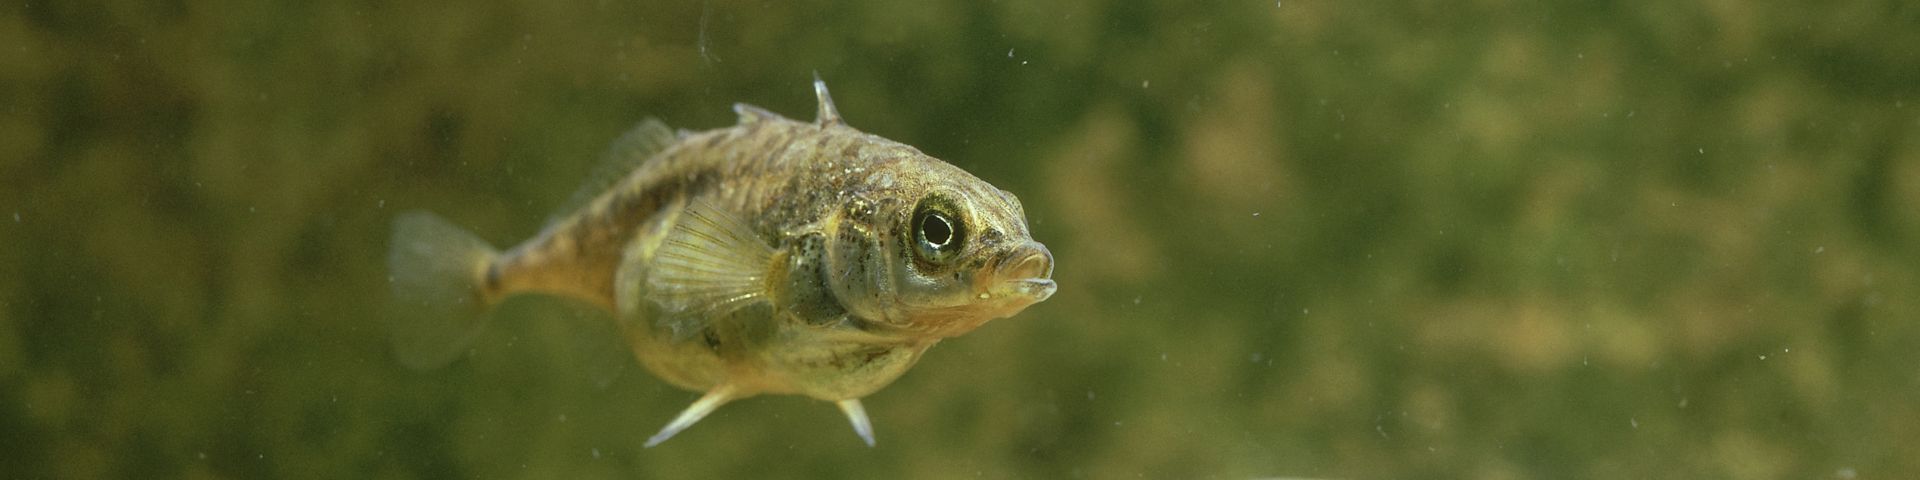 A stickleback fish swims.